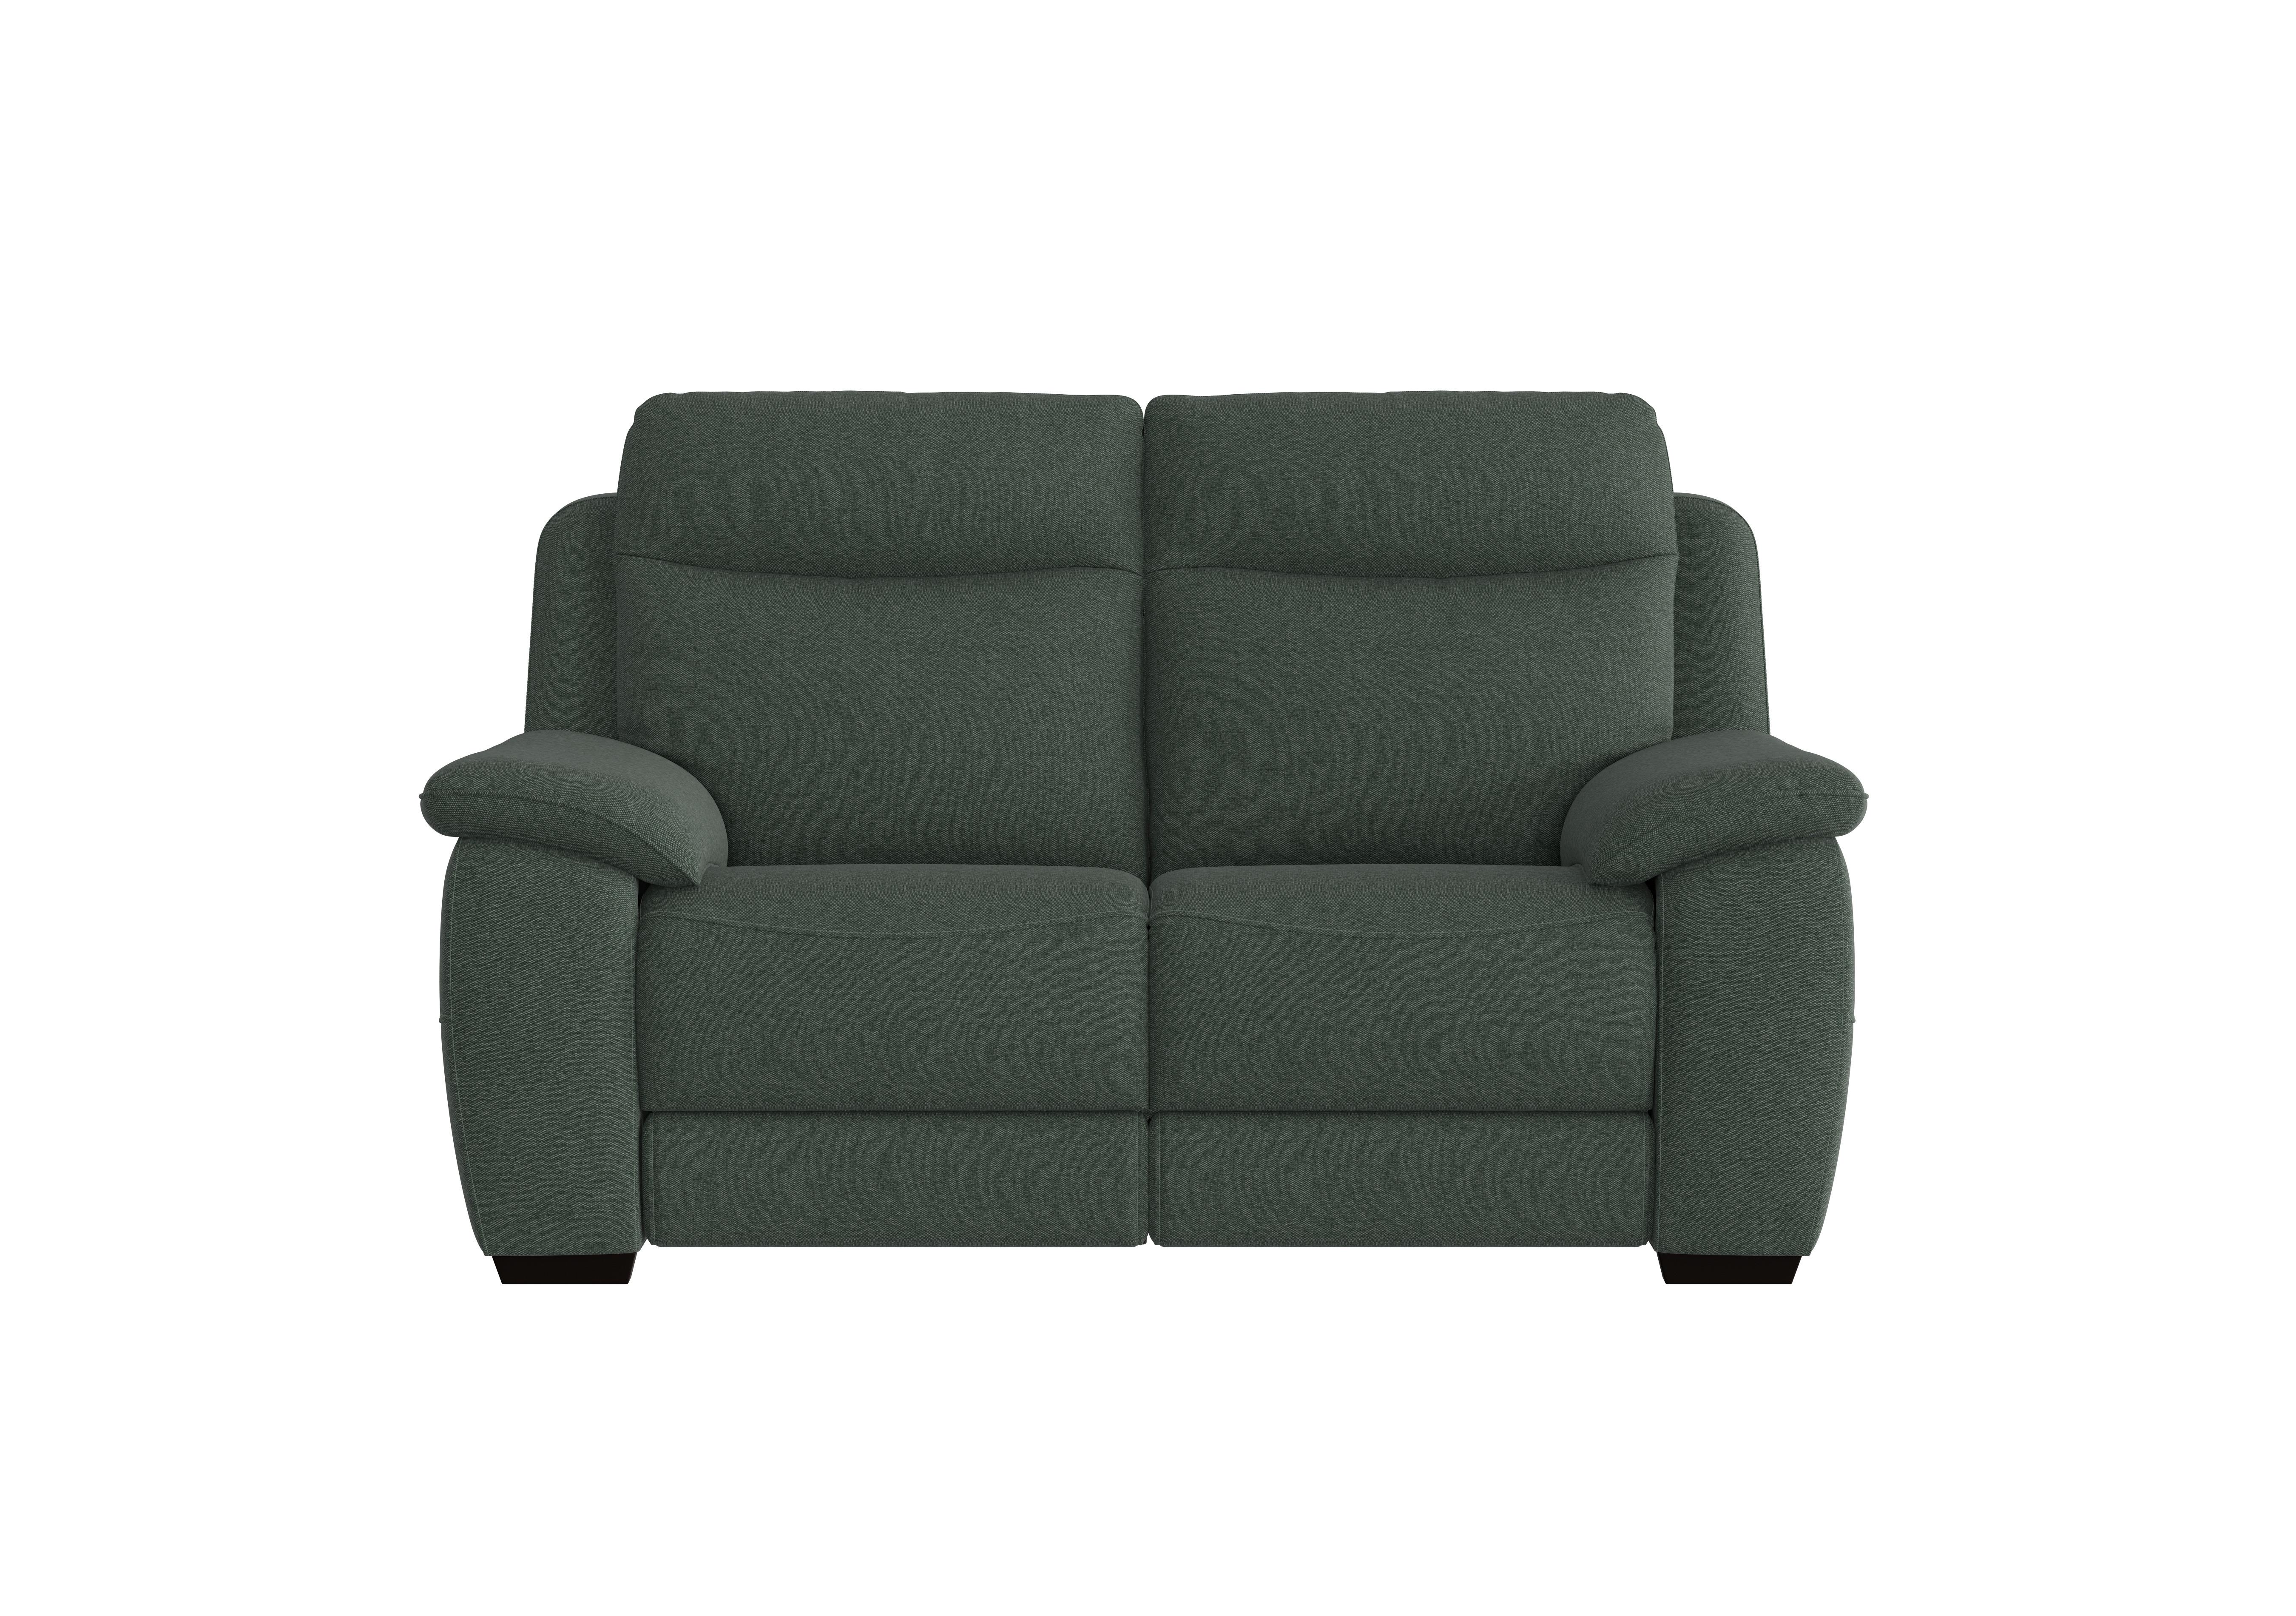 Starlight Express 2 Seater Fabric Sofa in Fab-Ska-R48 Moss Green on Furniture Village